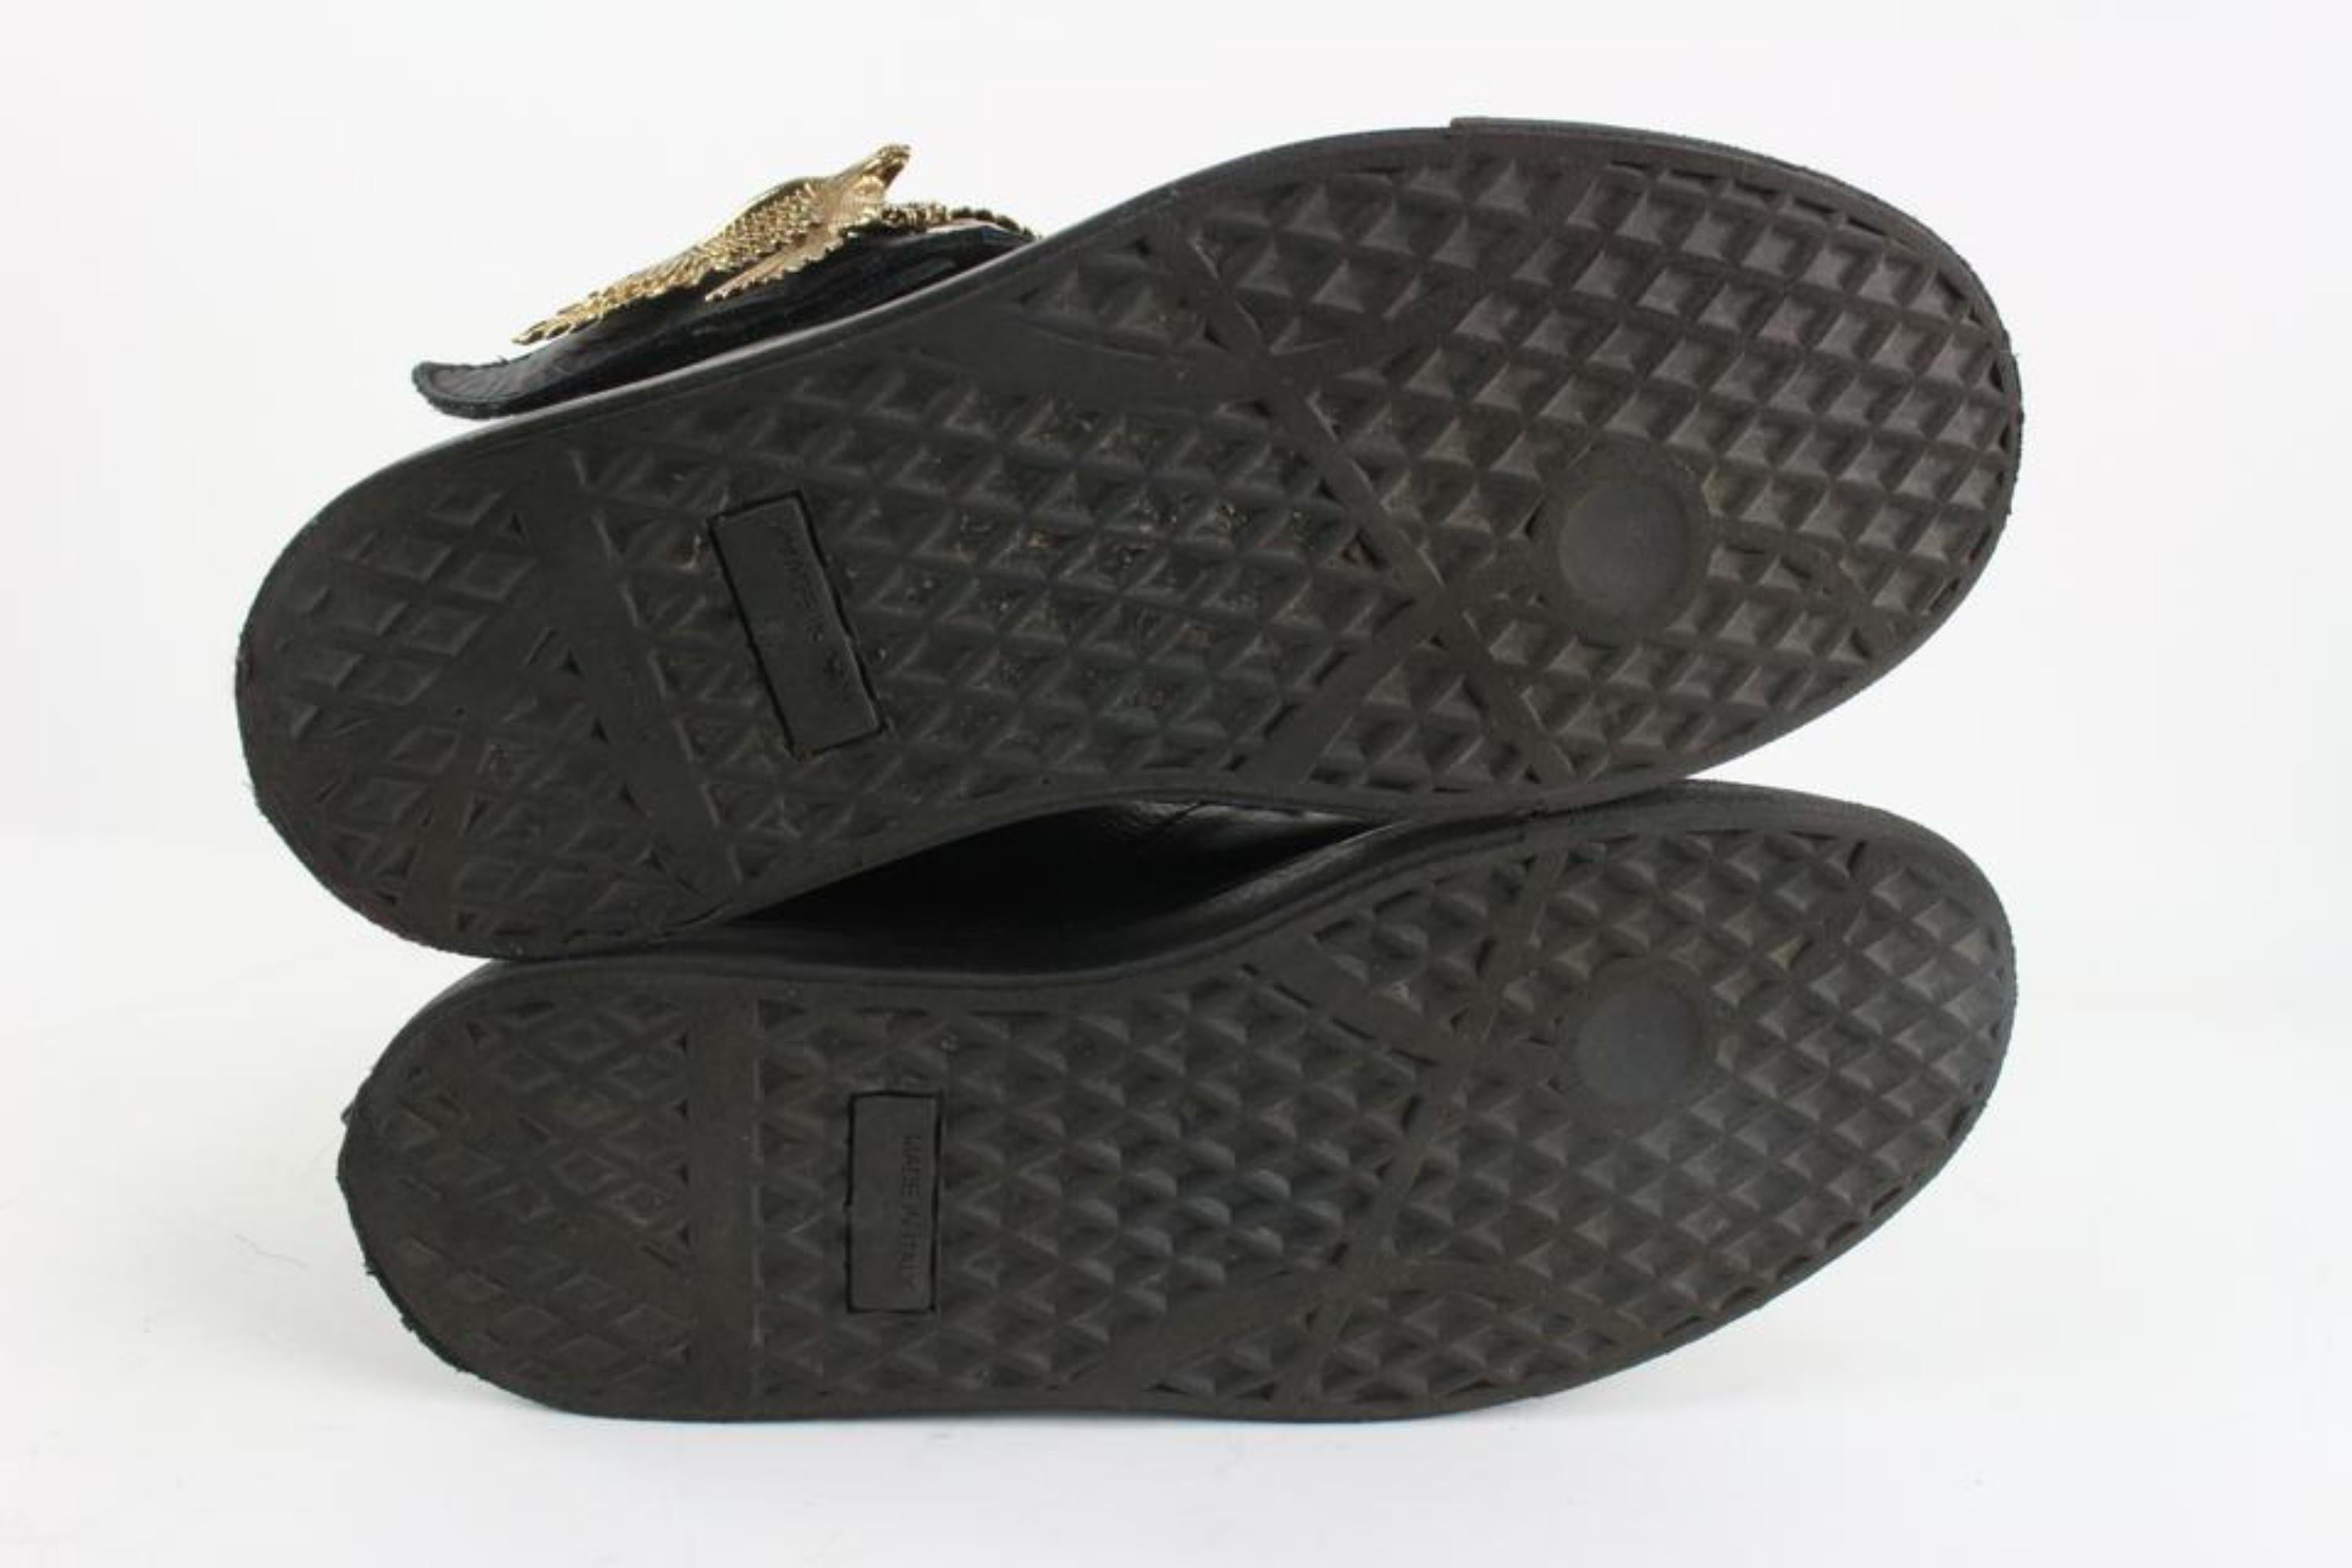 giuseppe zanotti black and gold sneakers